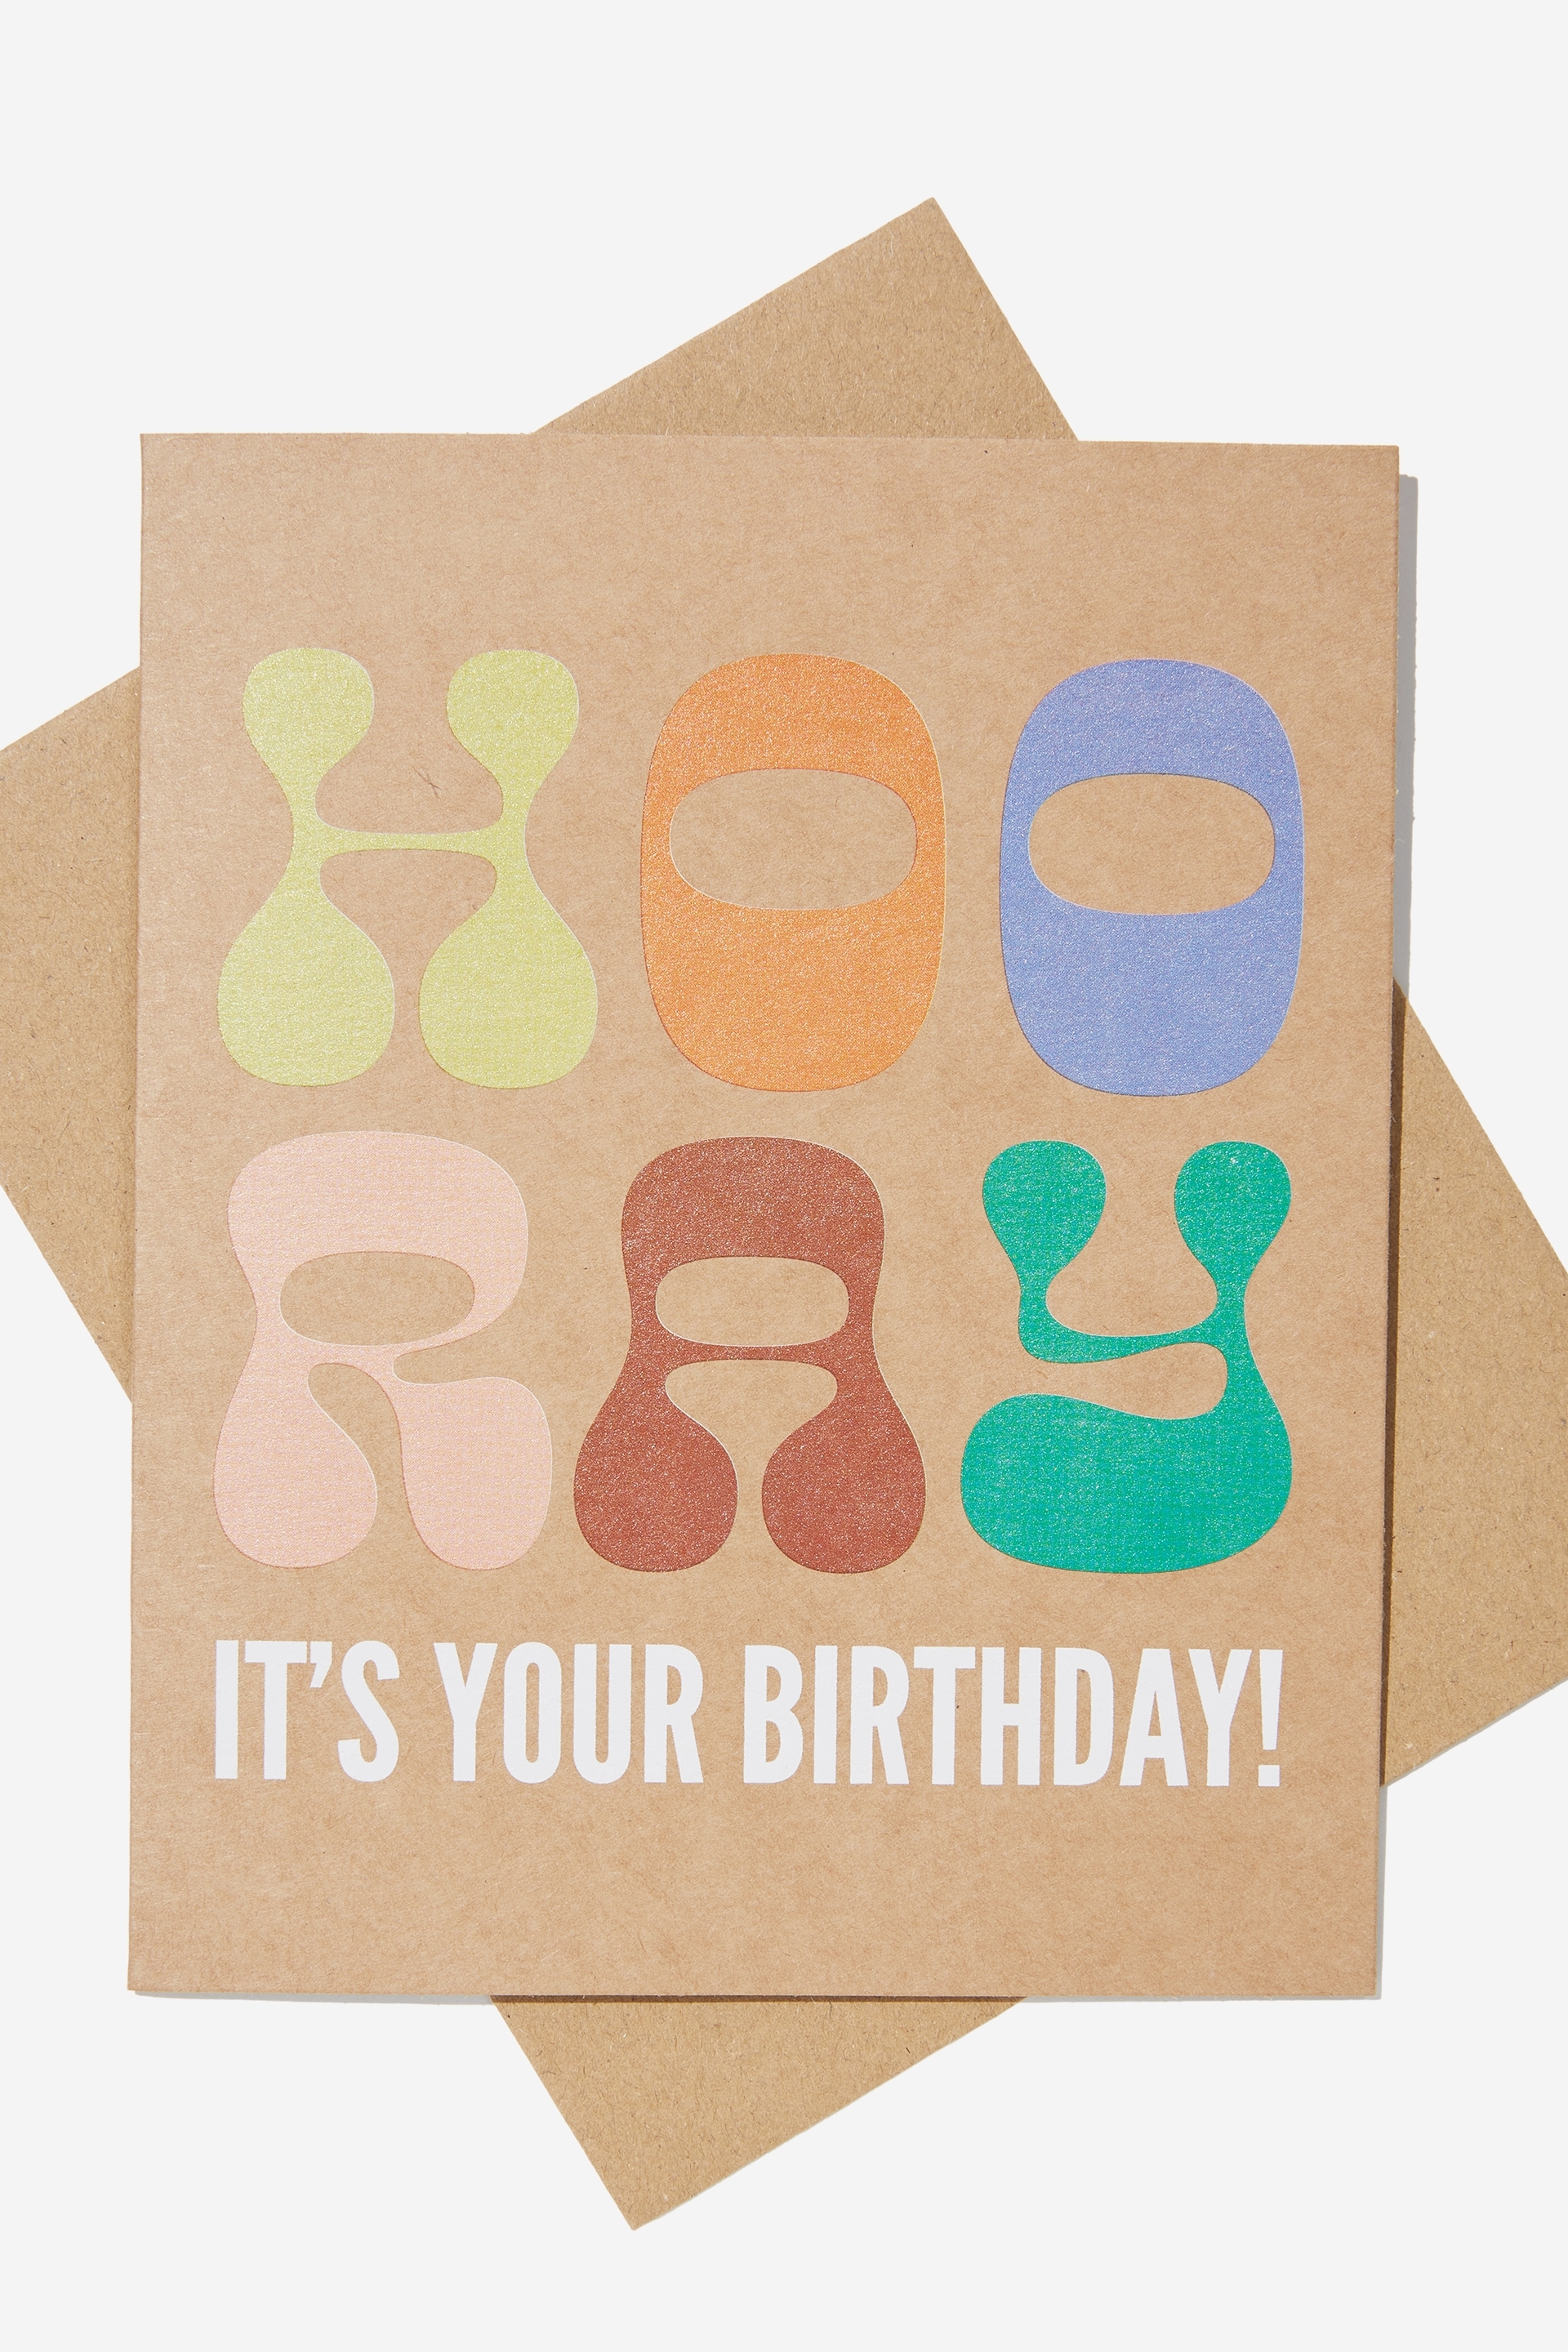 Typo - Nice Birthday Card - Hooray it’s your birthday